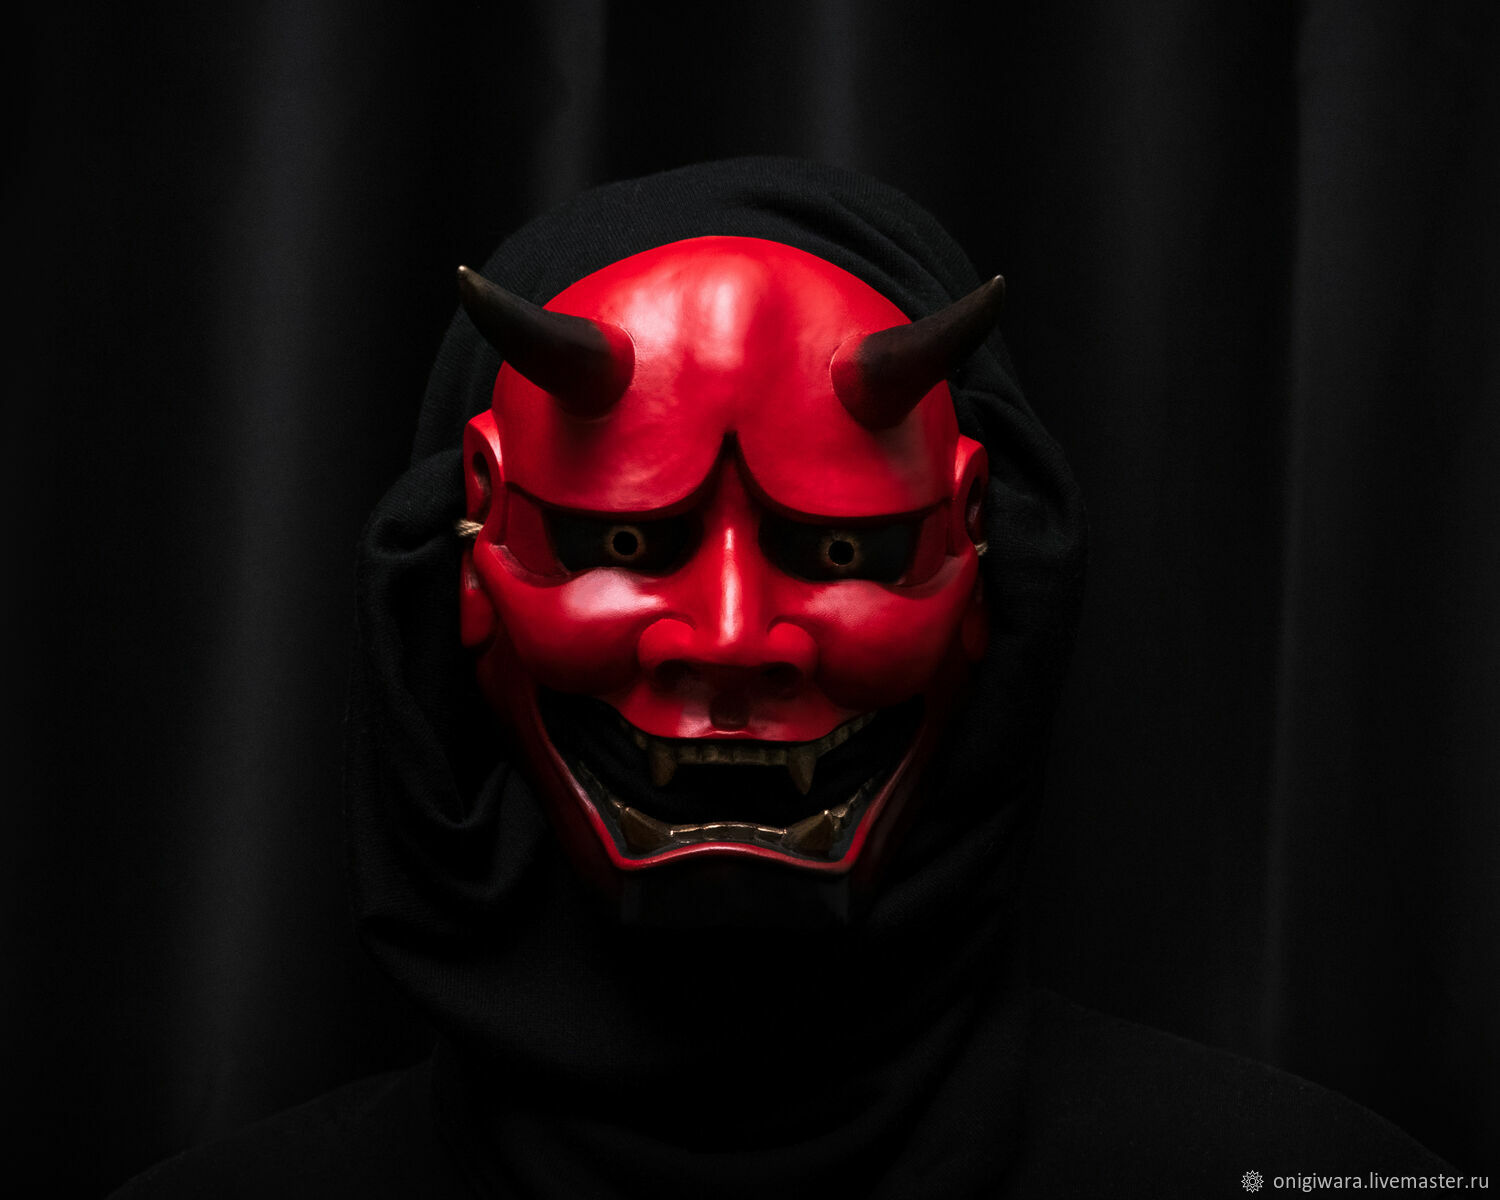  Red Hannya Mask Ханья маска Красная японская маска, Маски интерьерные, Челябинск,  Фото №1